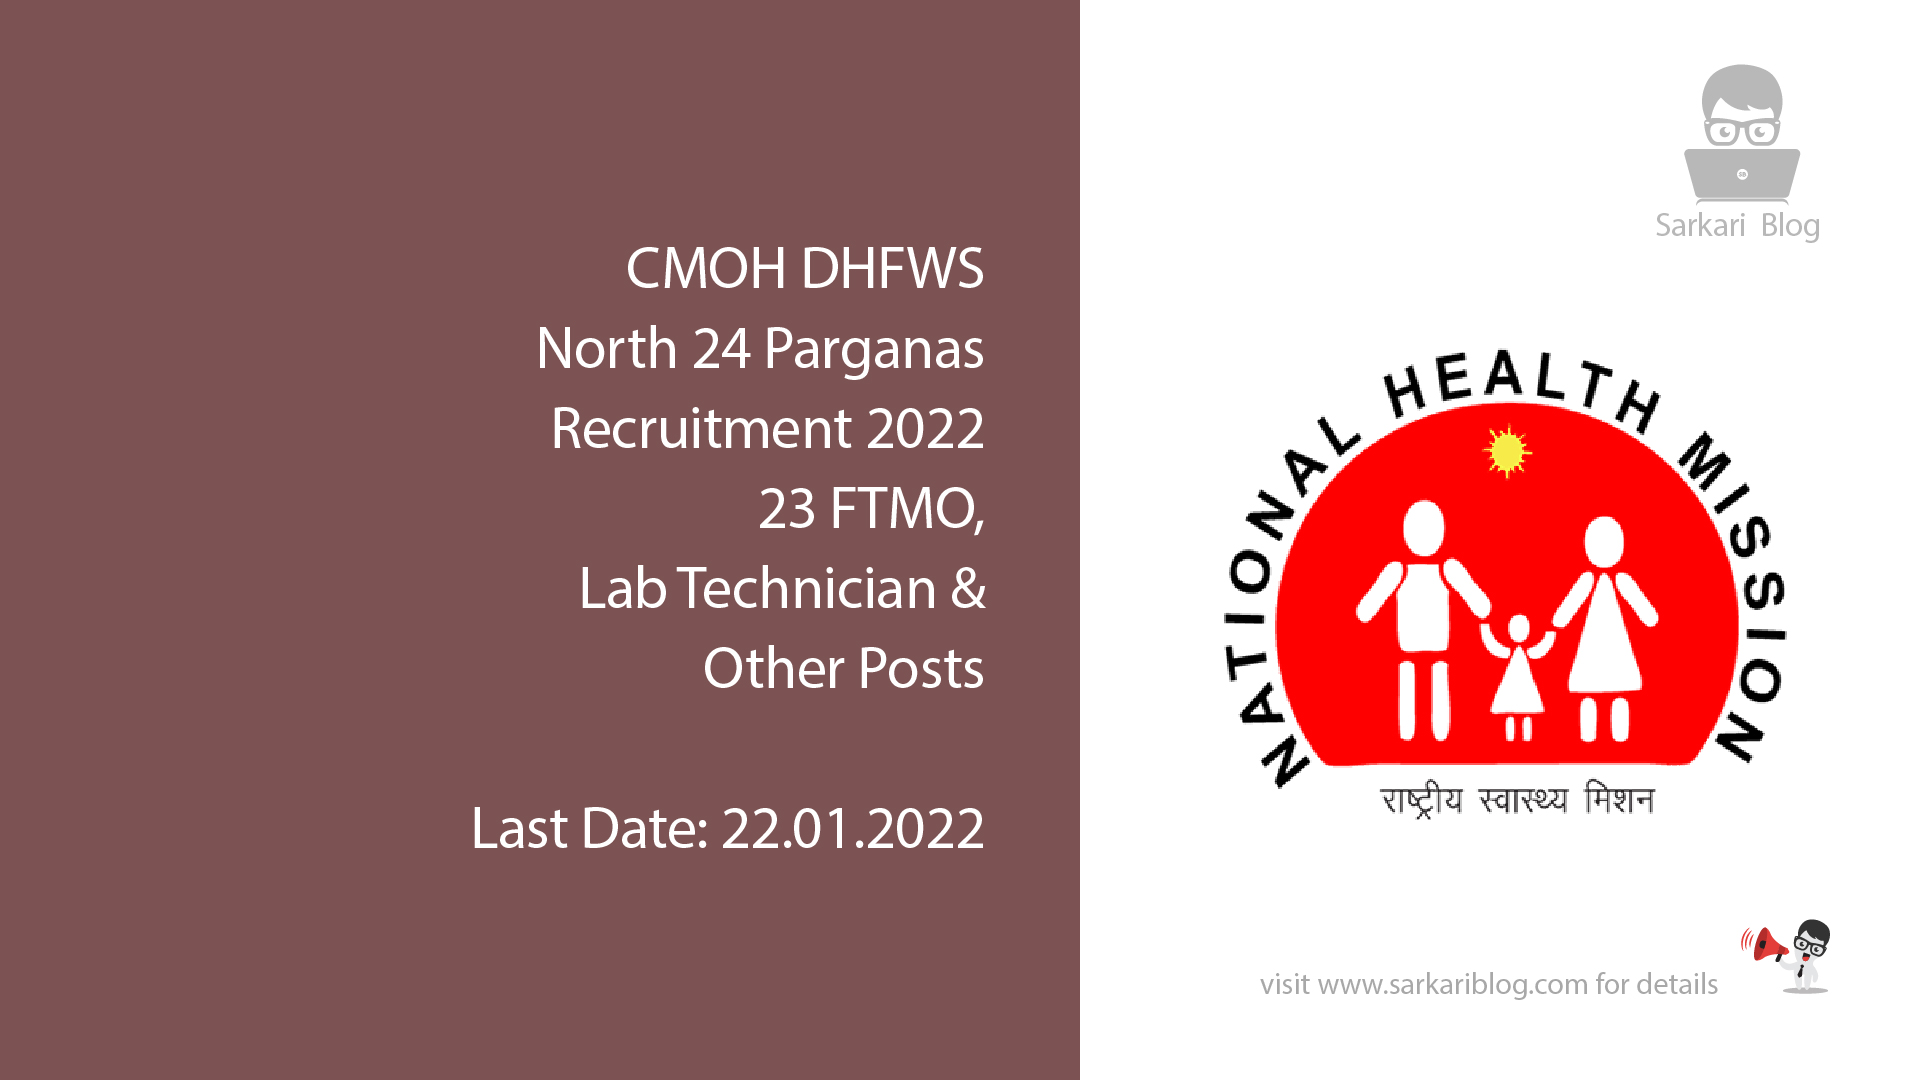 CMOH DHFWS North 24 Parganas Recruitment 2022